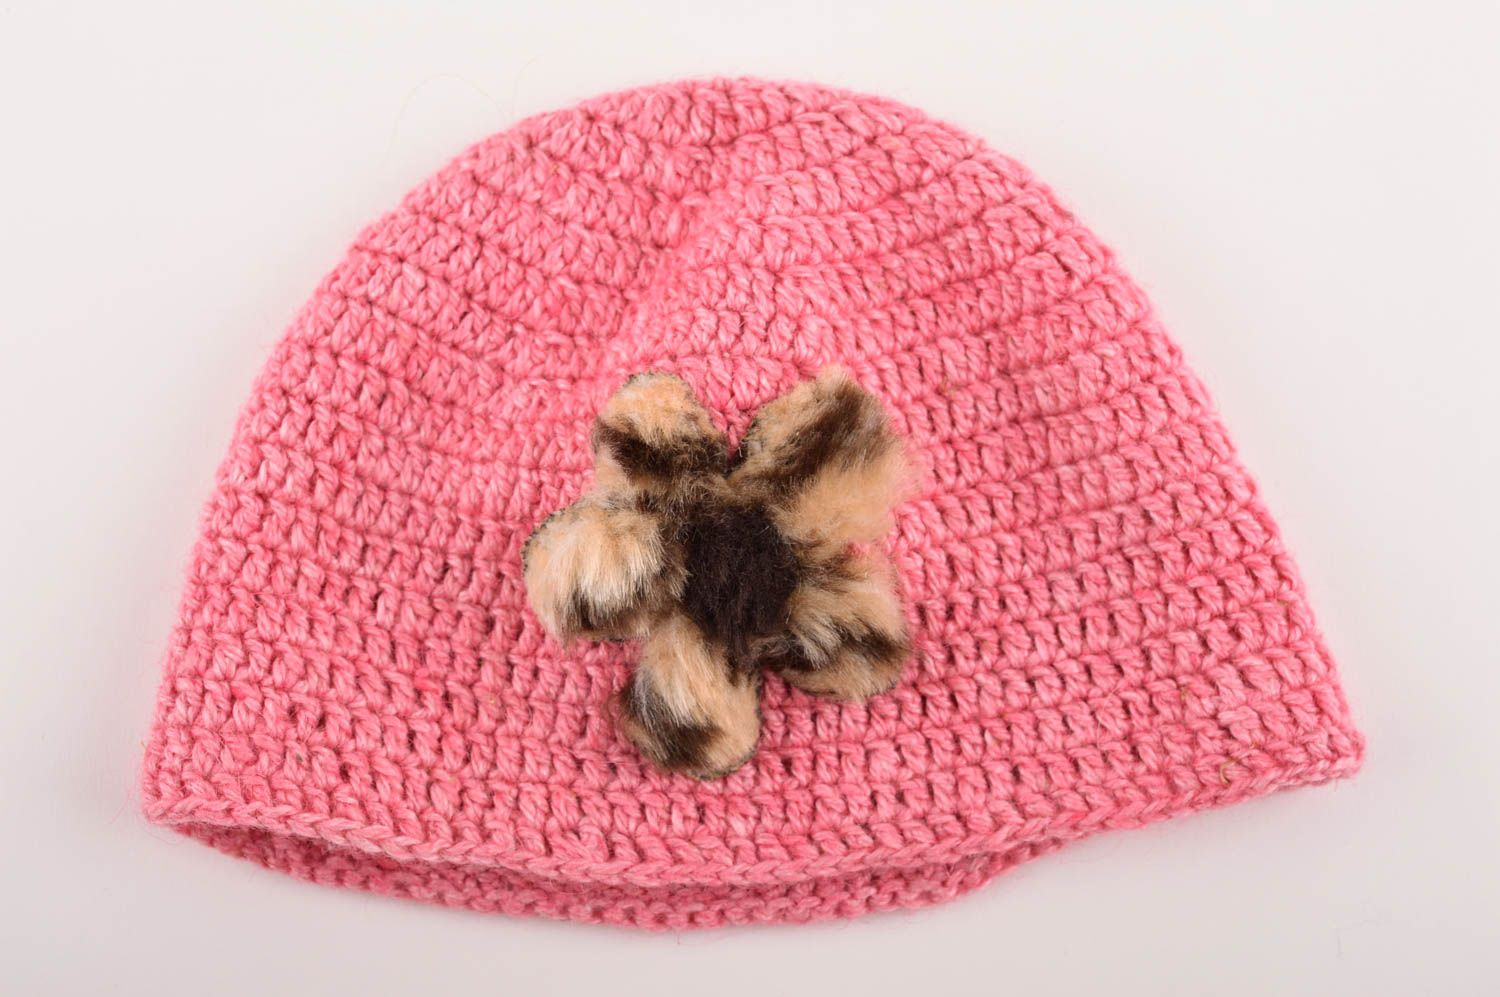 Handmade warm hat designer hat for baby unusual funny hat crocheted hat photo 5